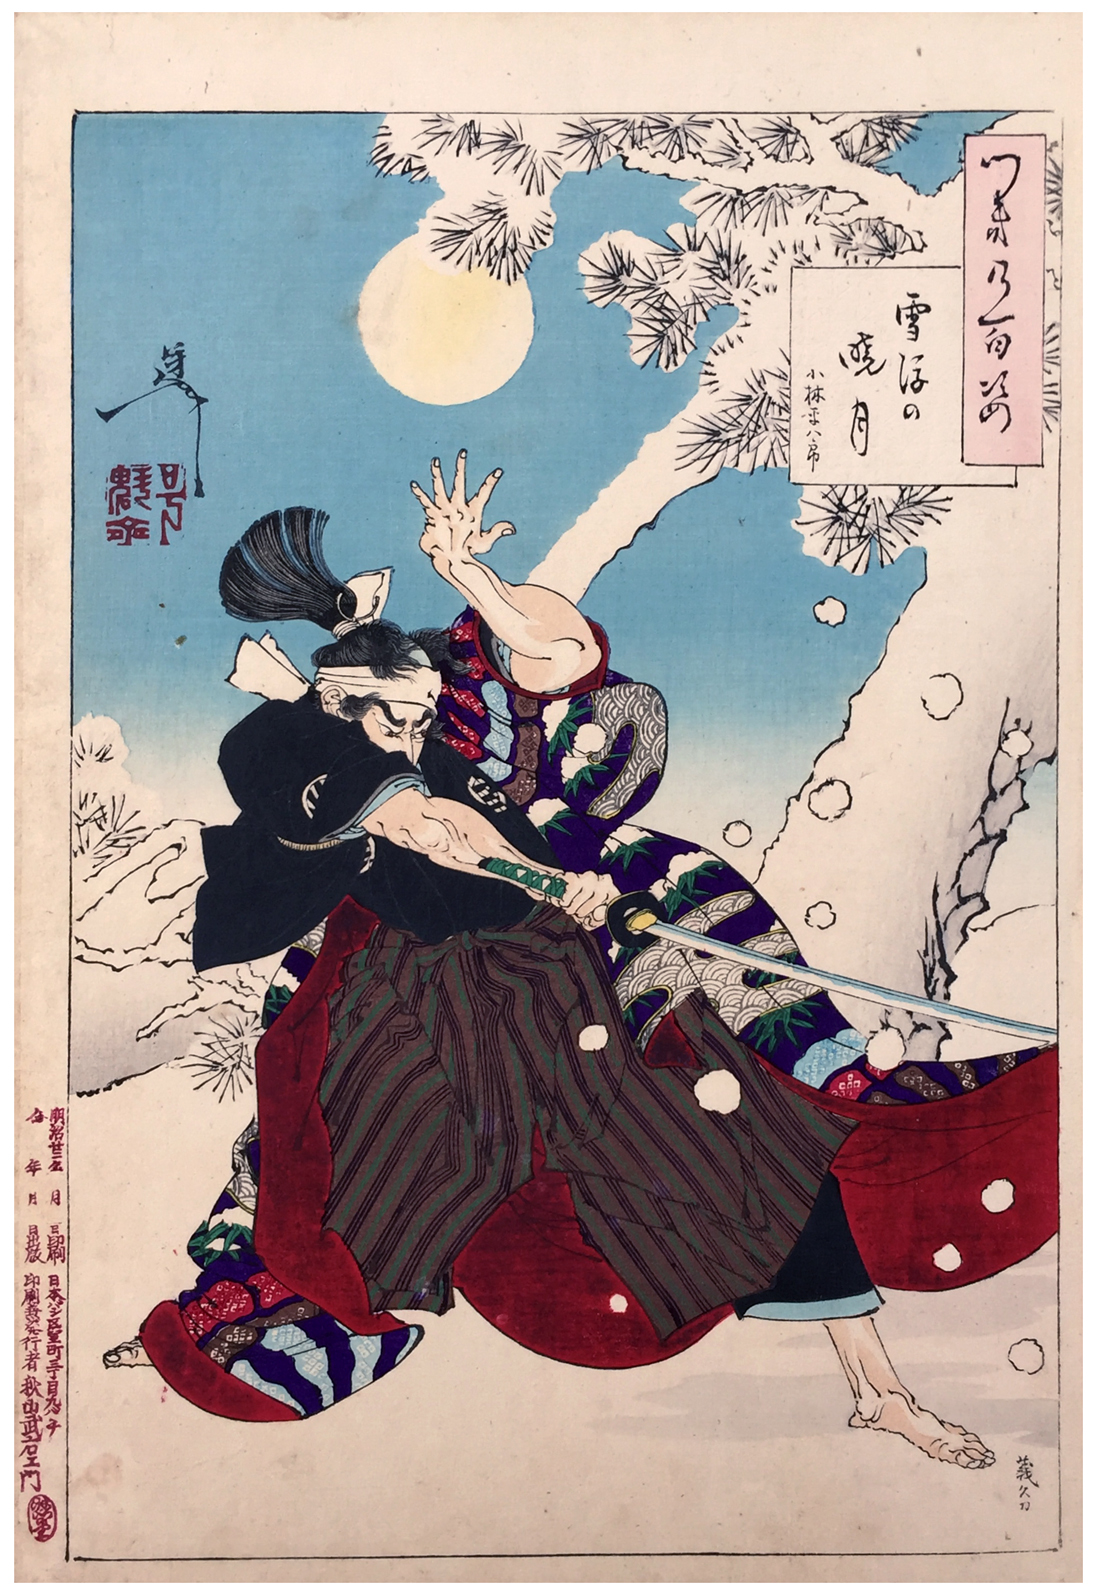 月百姿 （雪後之曉月） by Tsukioka Yoshitoshi - 1889 